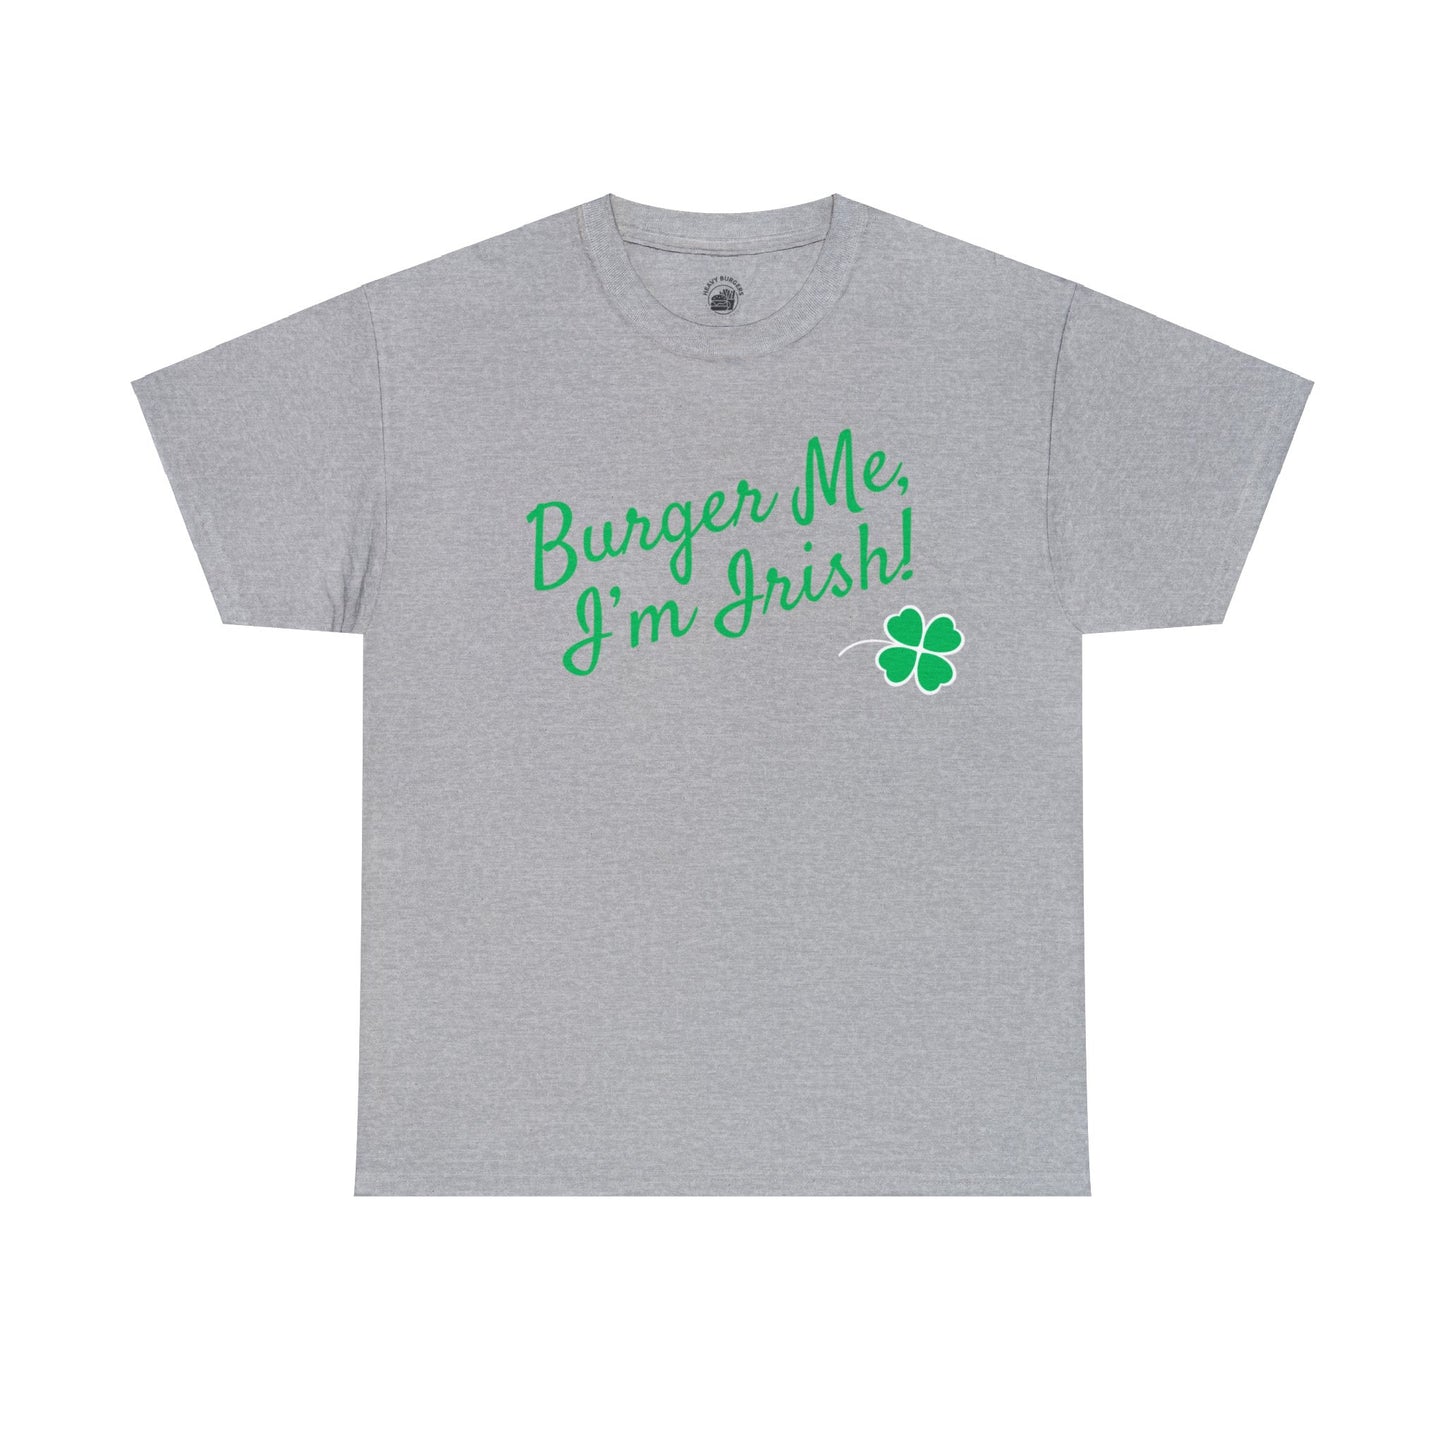 Burger Me, I'm Irish! Unisex T-Shirt.